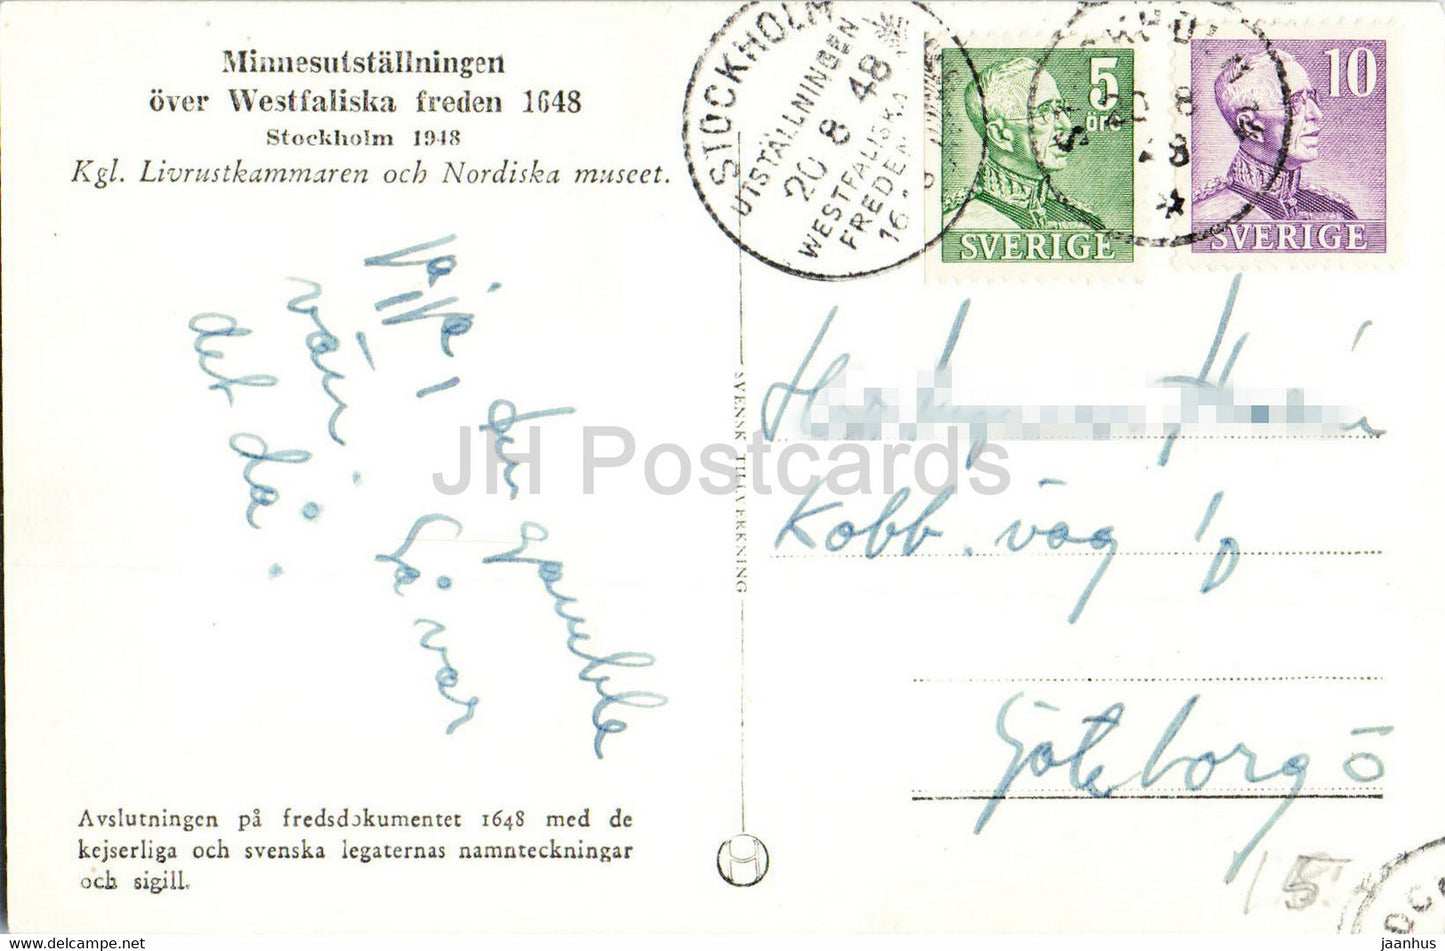 Minnesutstallningen over Westfaliska freden 1648 - Peace of Westphalia Treaty - old postcard - 1948 - Sweden - used